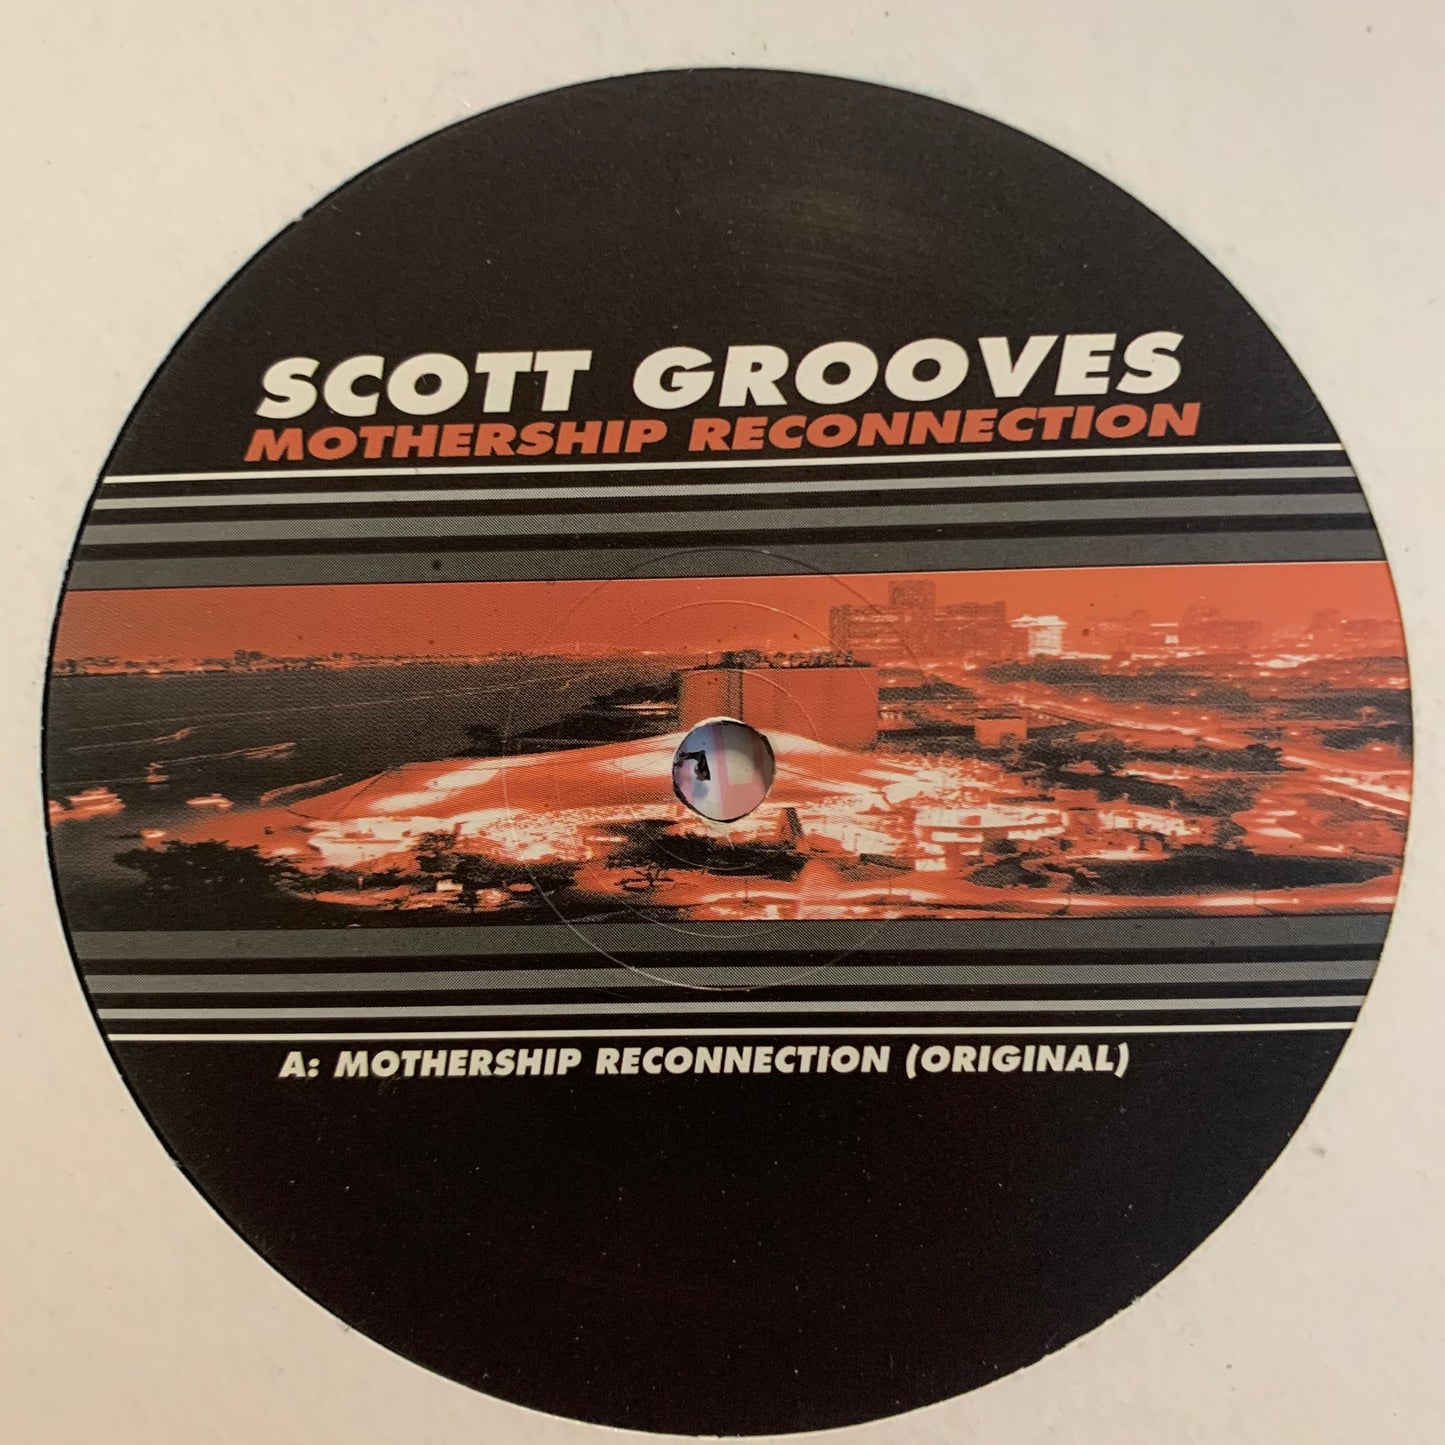 Daft Punk, Scott Grooves “Mothership Reconnection” 2 version 12inch Vinyl